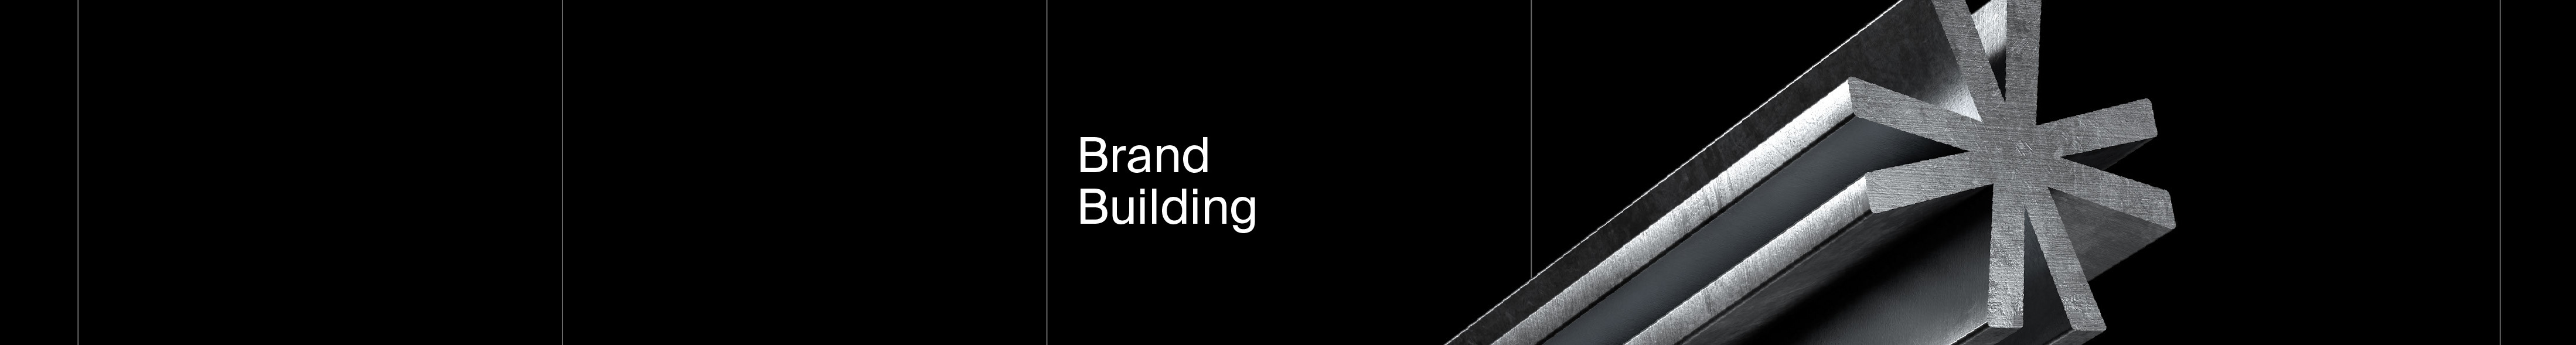 Banner profilu uživatele VXLAB Brand Building